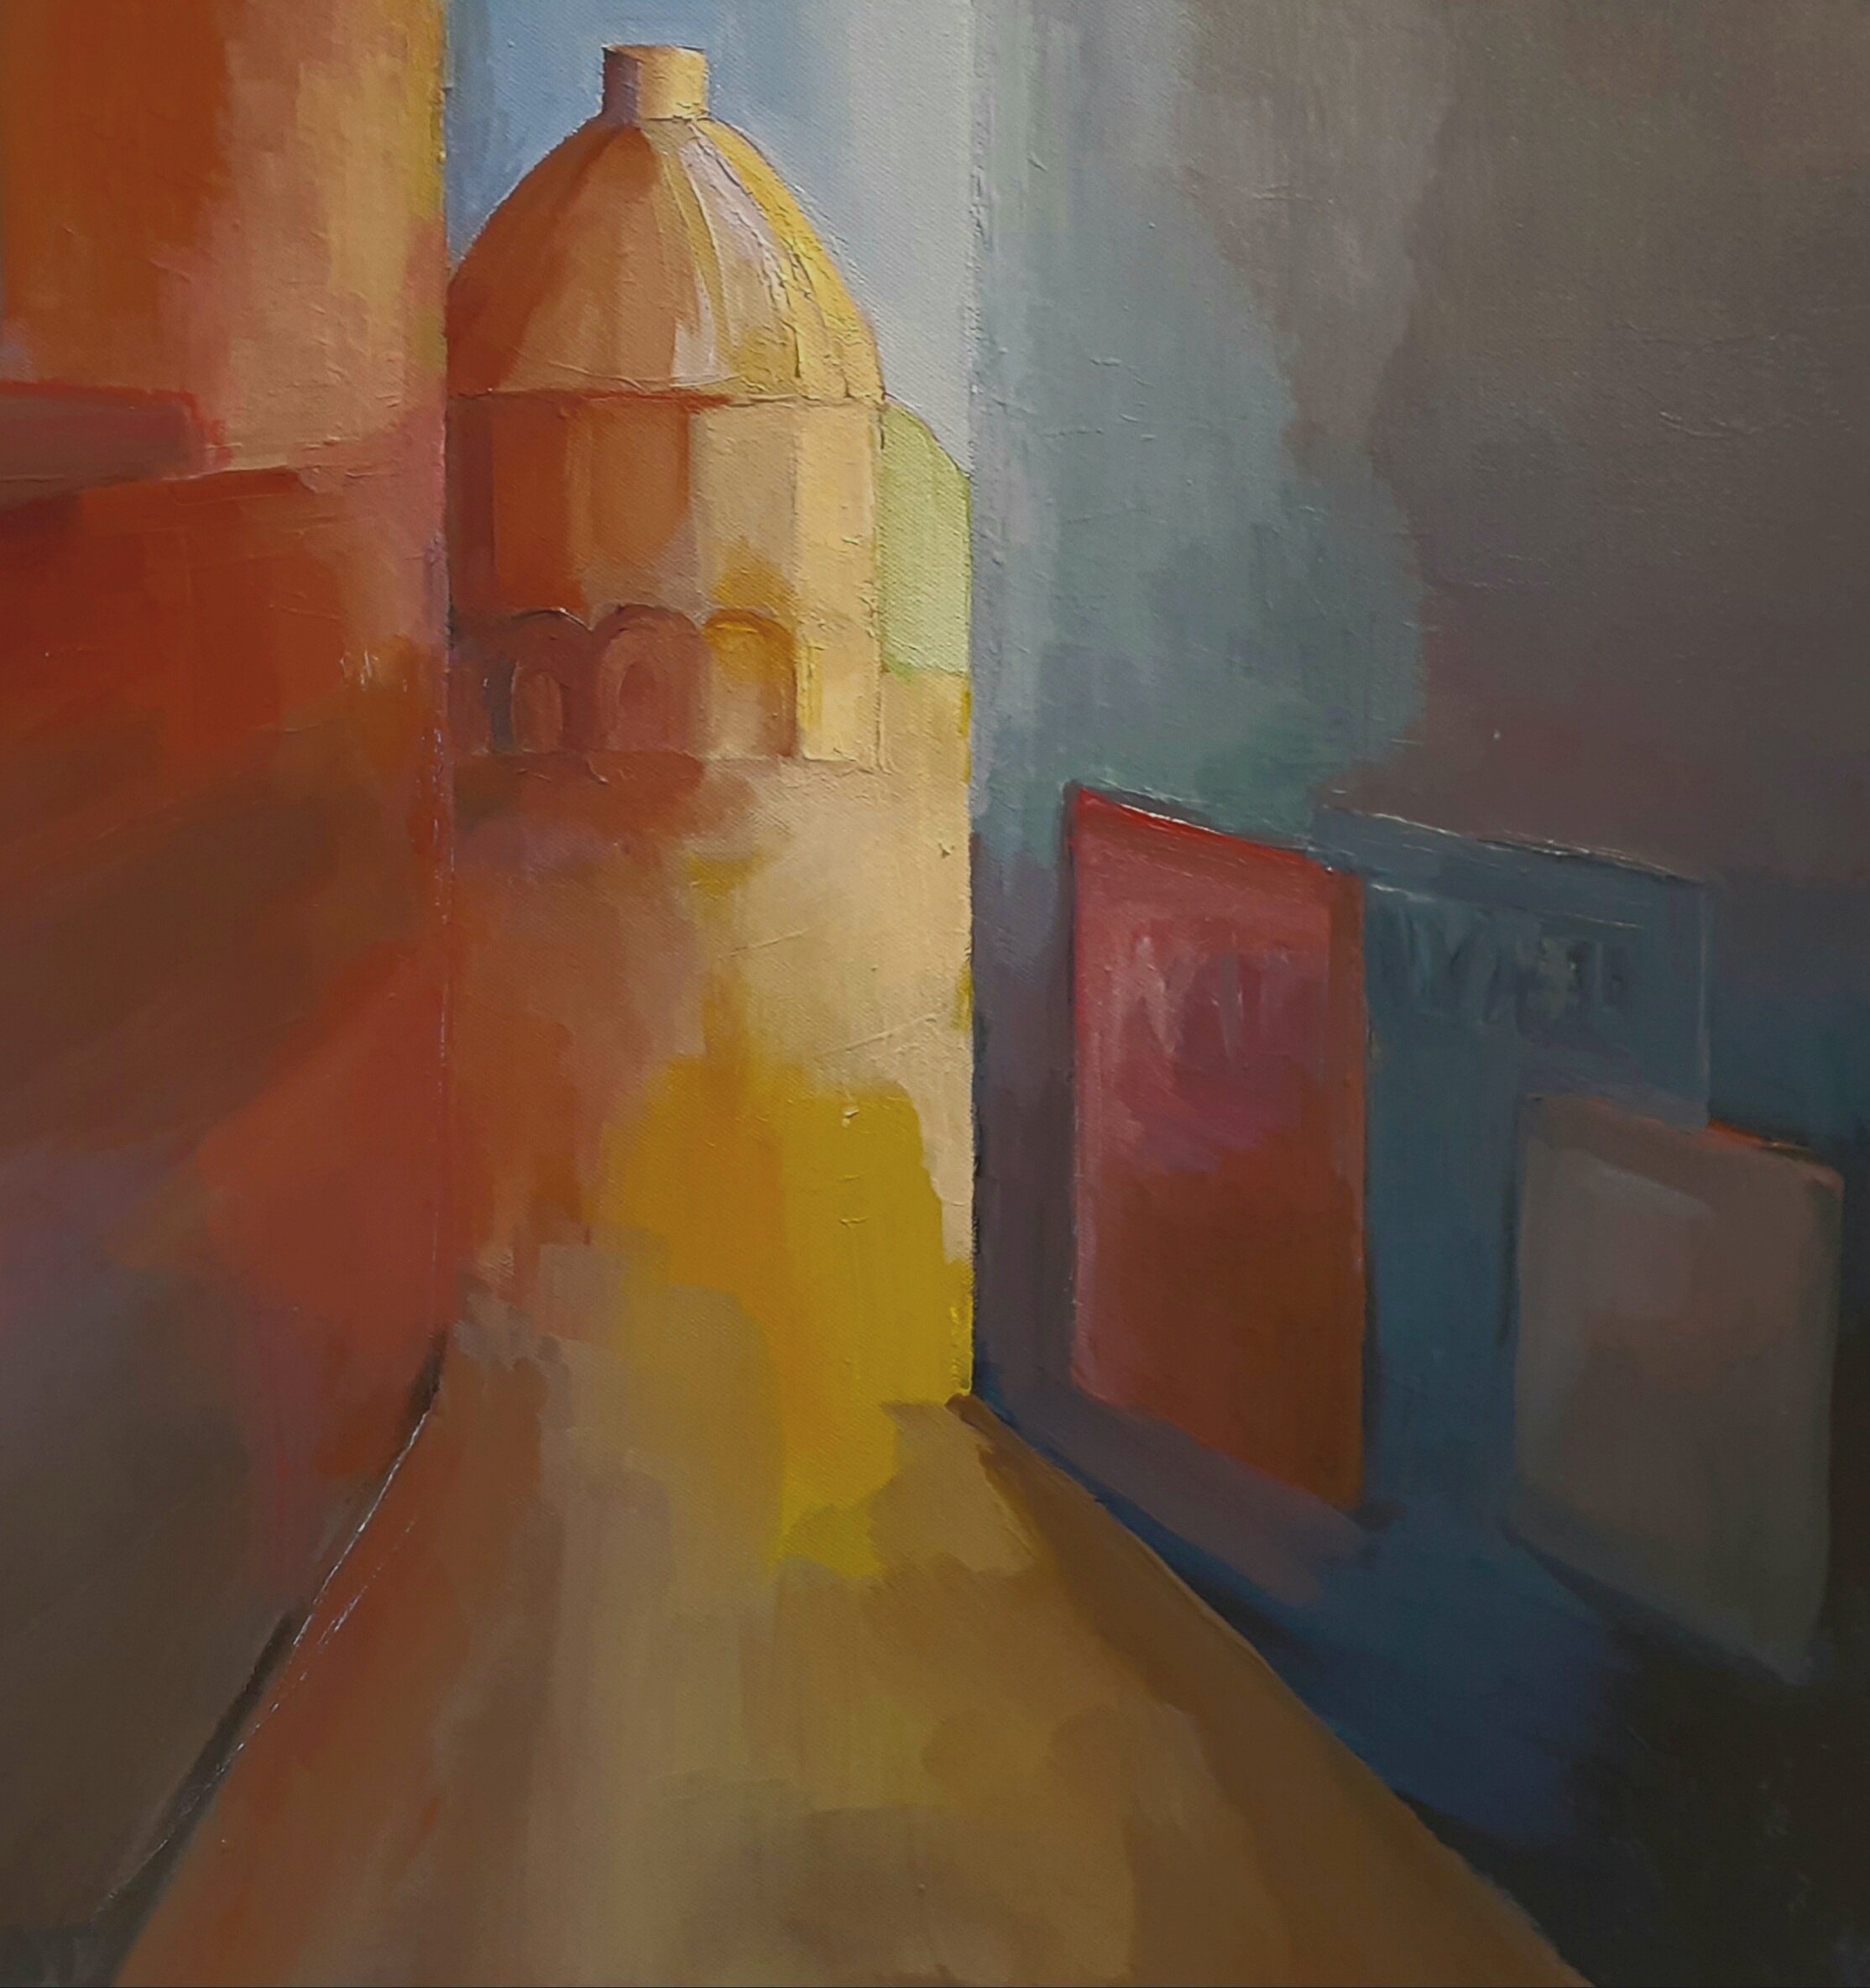   “Of Paris", oil on canvas, 18” x 18”, 2021  